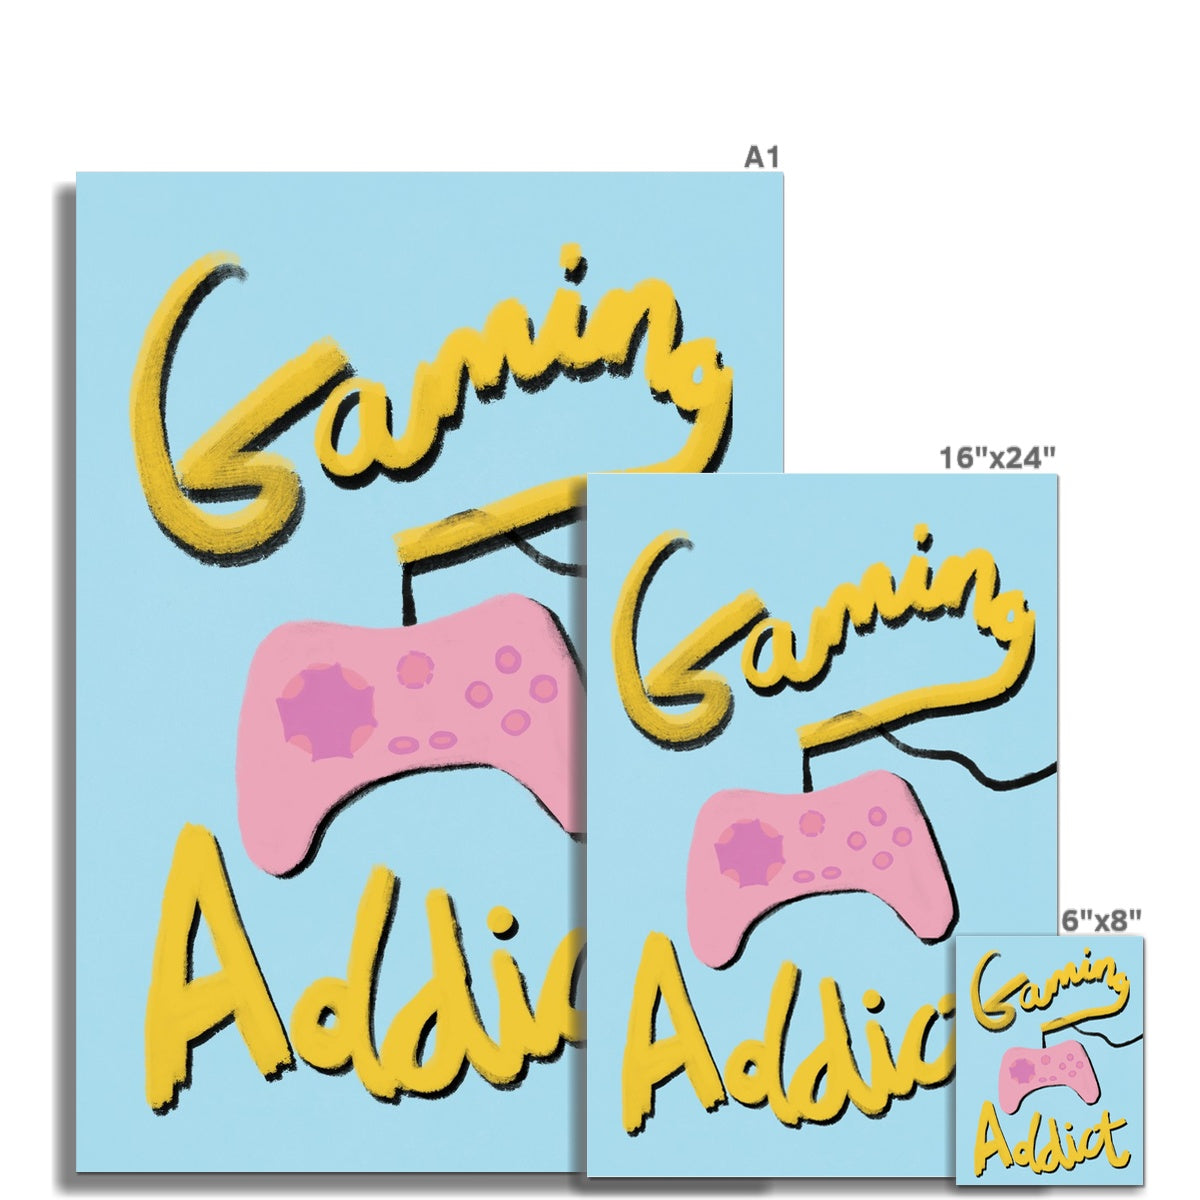 Gaming Addict Print - Light Blue, Yellow, Pink Fine Art Print